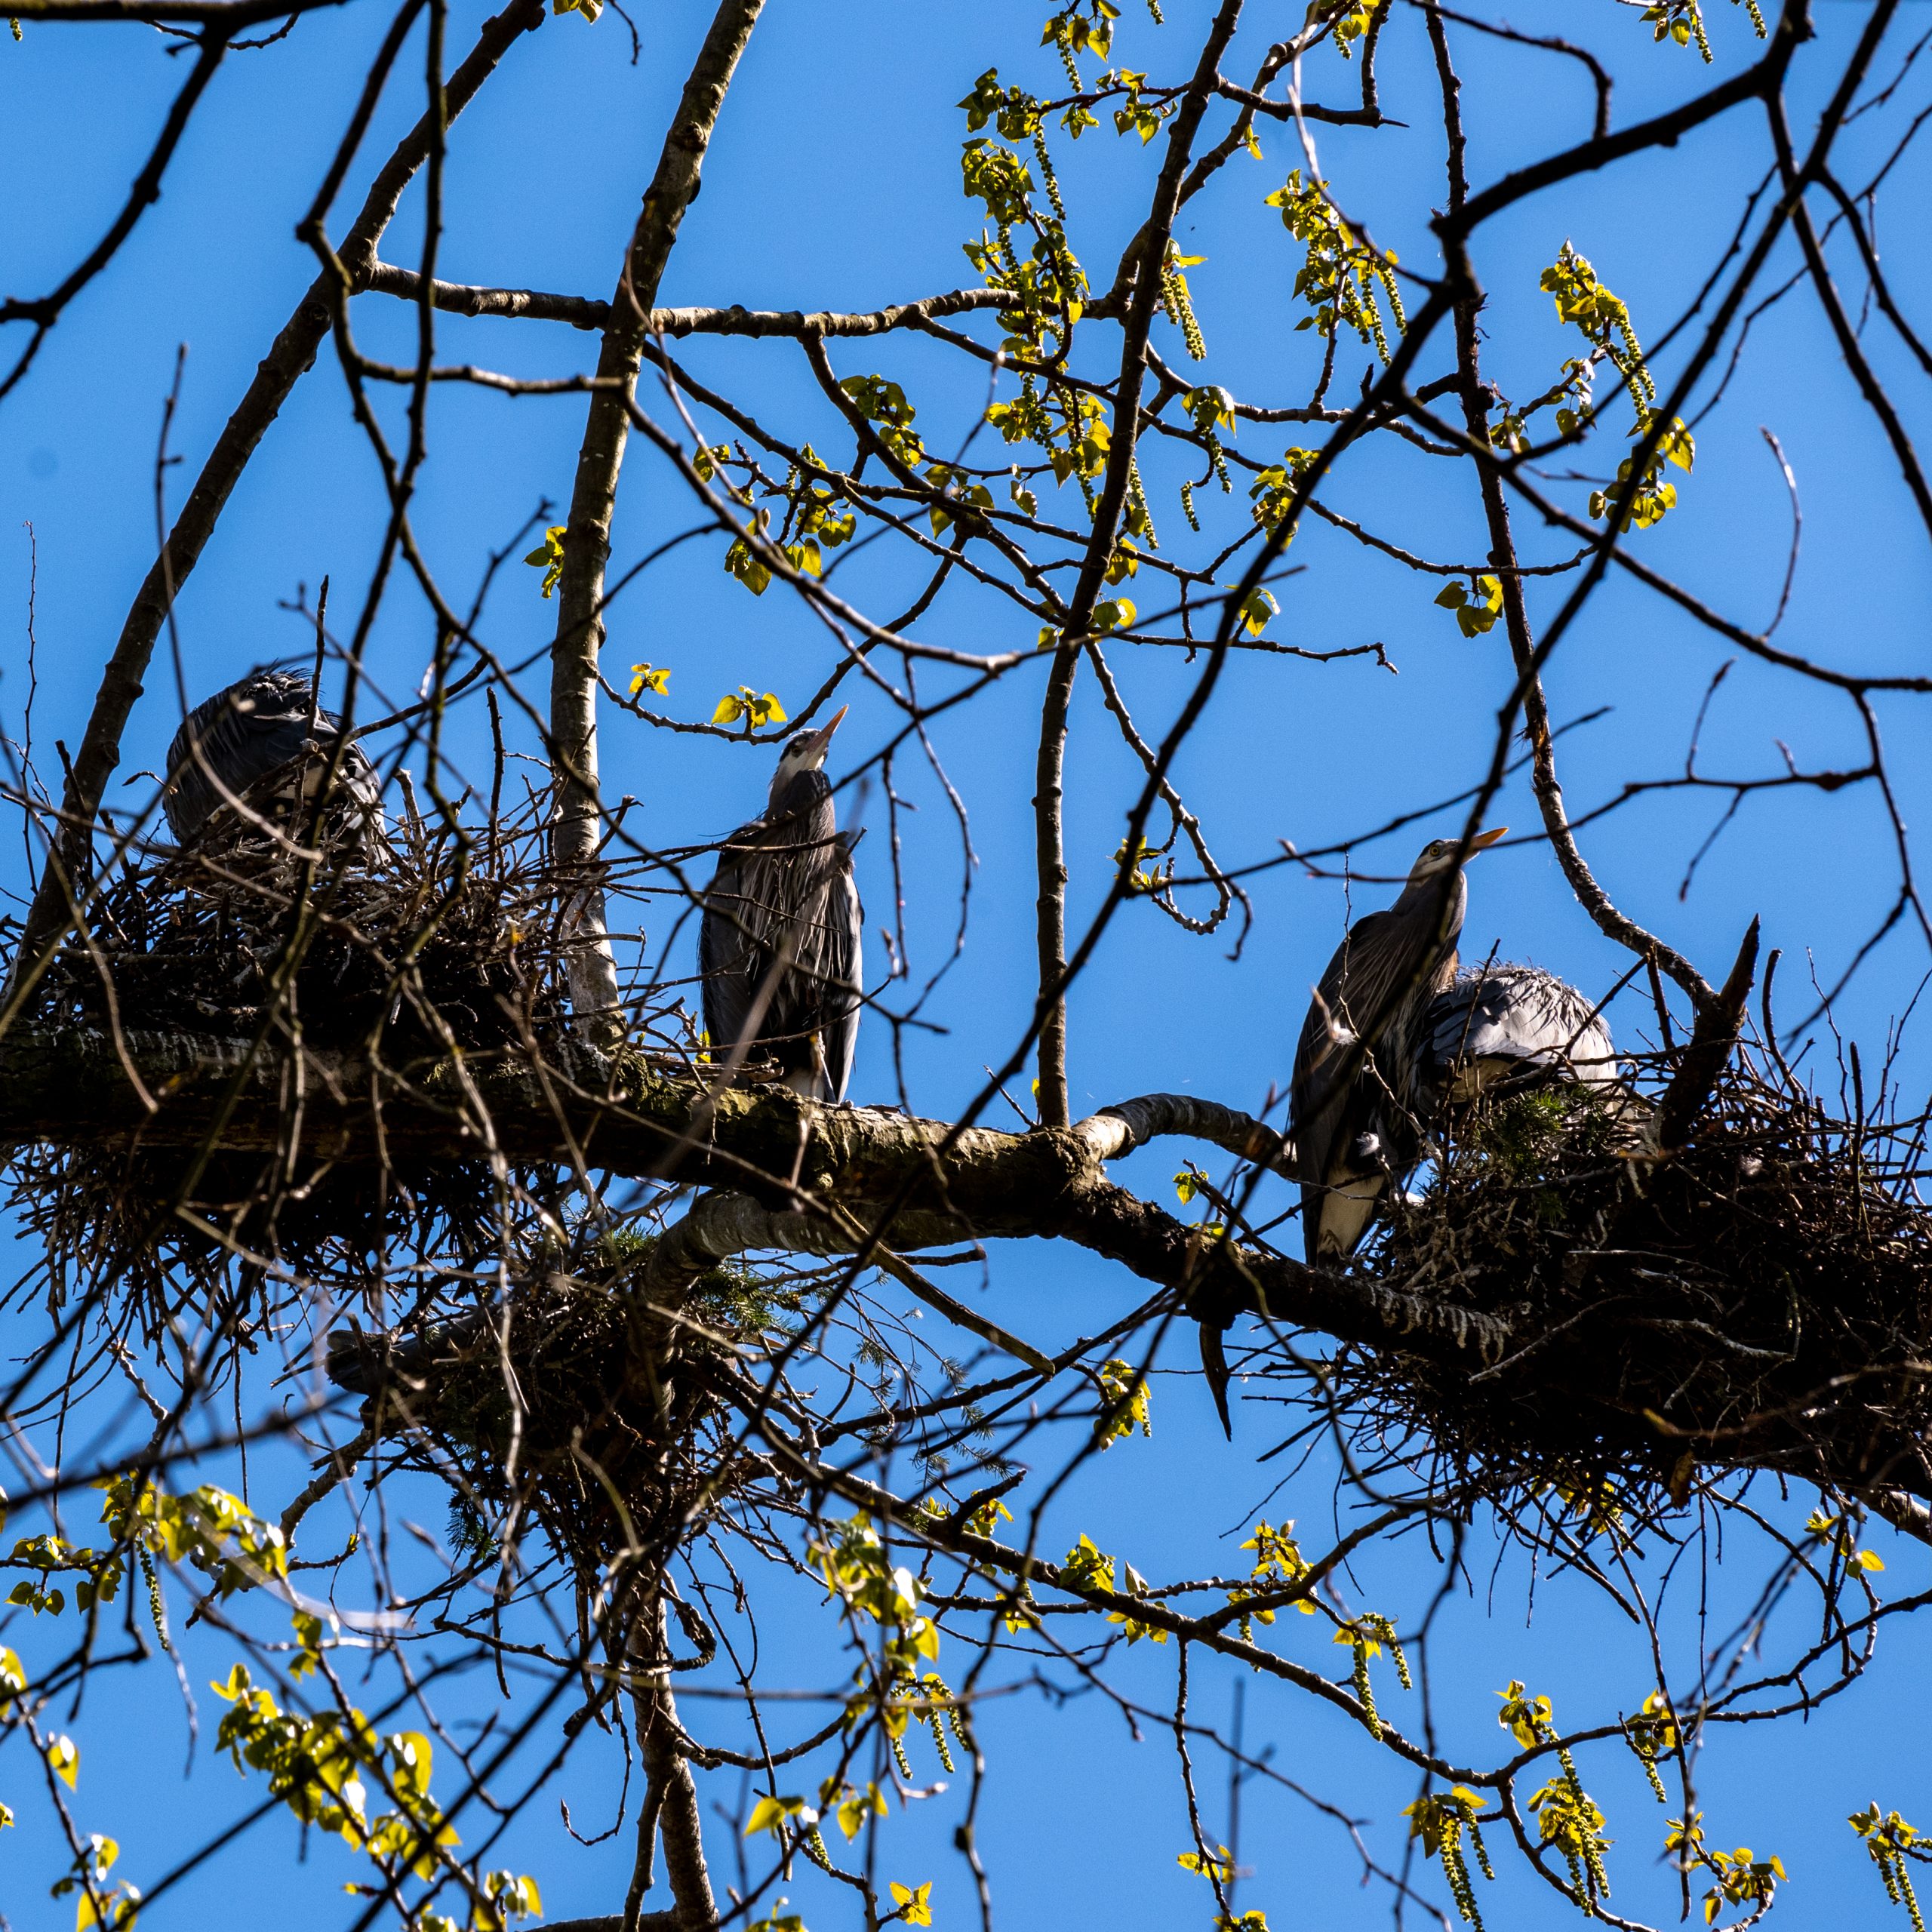 Blue Herons in nests on a tree at Deer Lake in Burnaby, BC